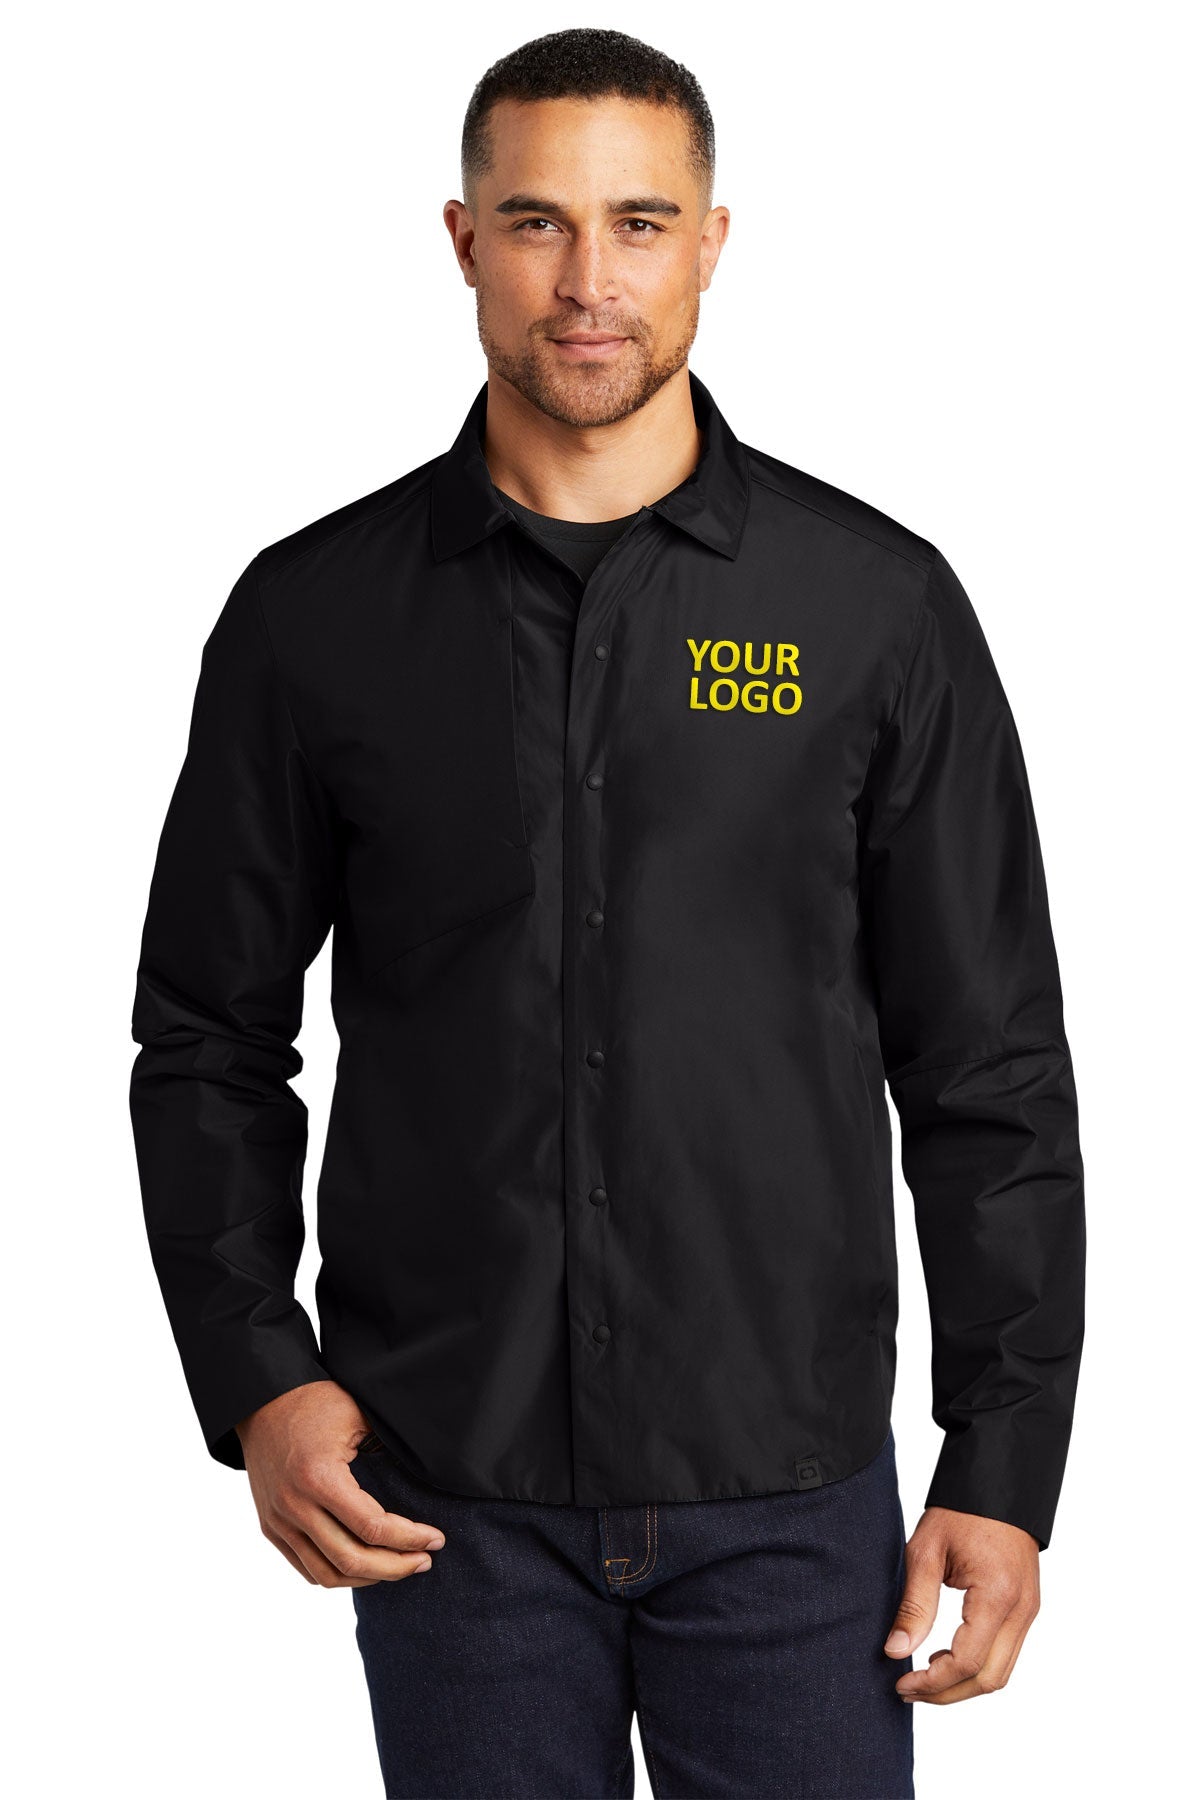 OGIO Blacktop OG754 company logo jackets